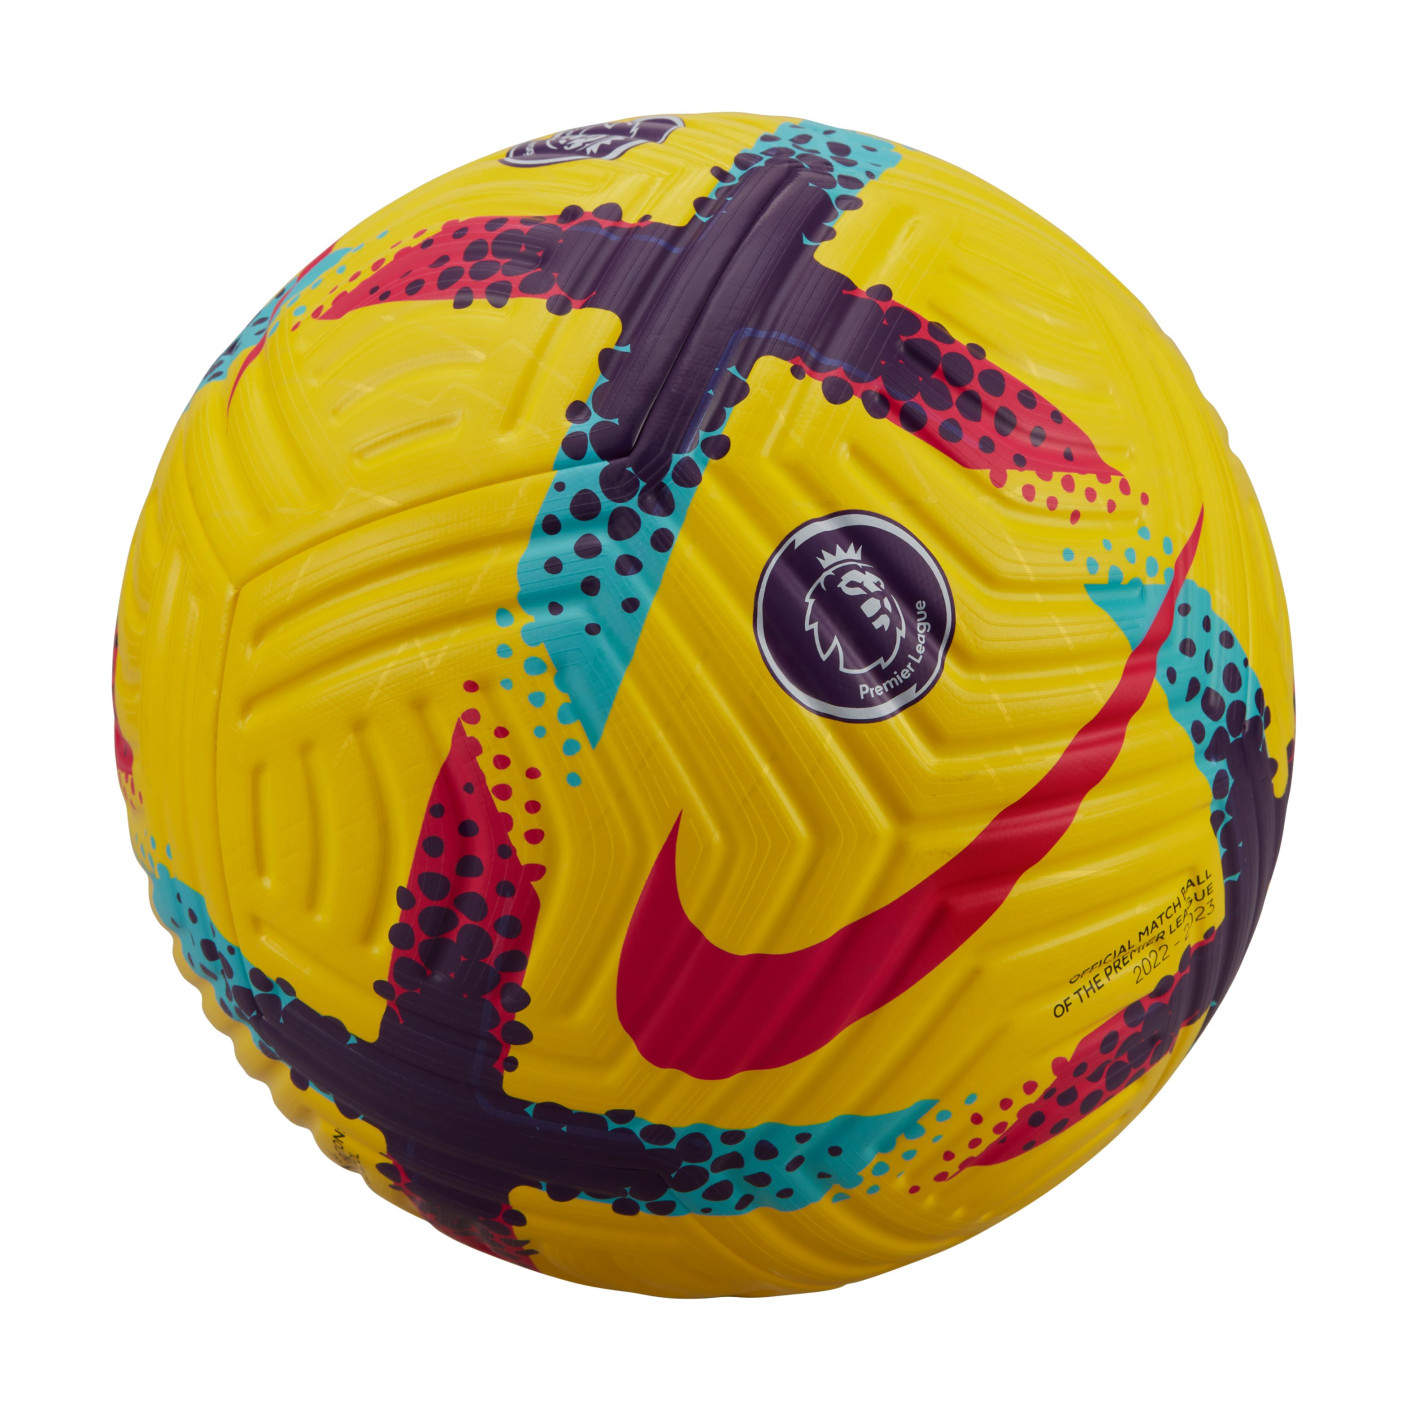 Nike Premier League Flight Ballon de Football Jaune Mauve